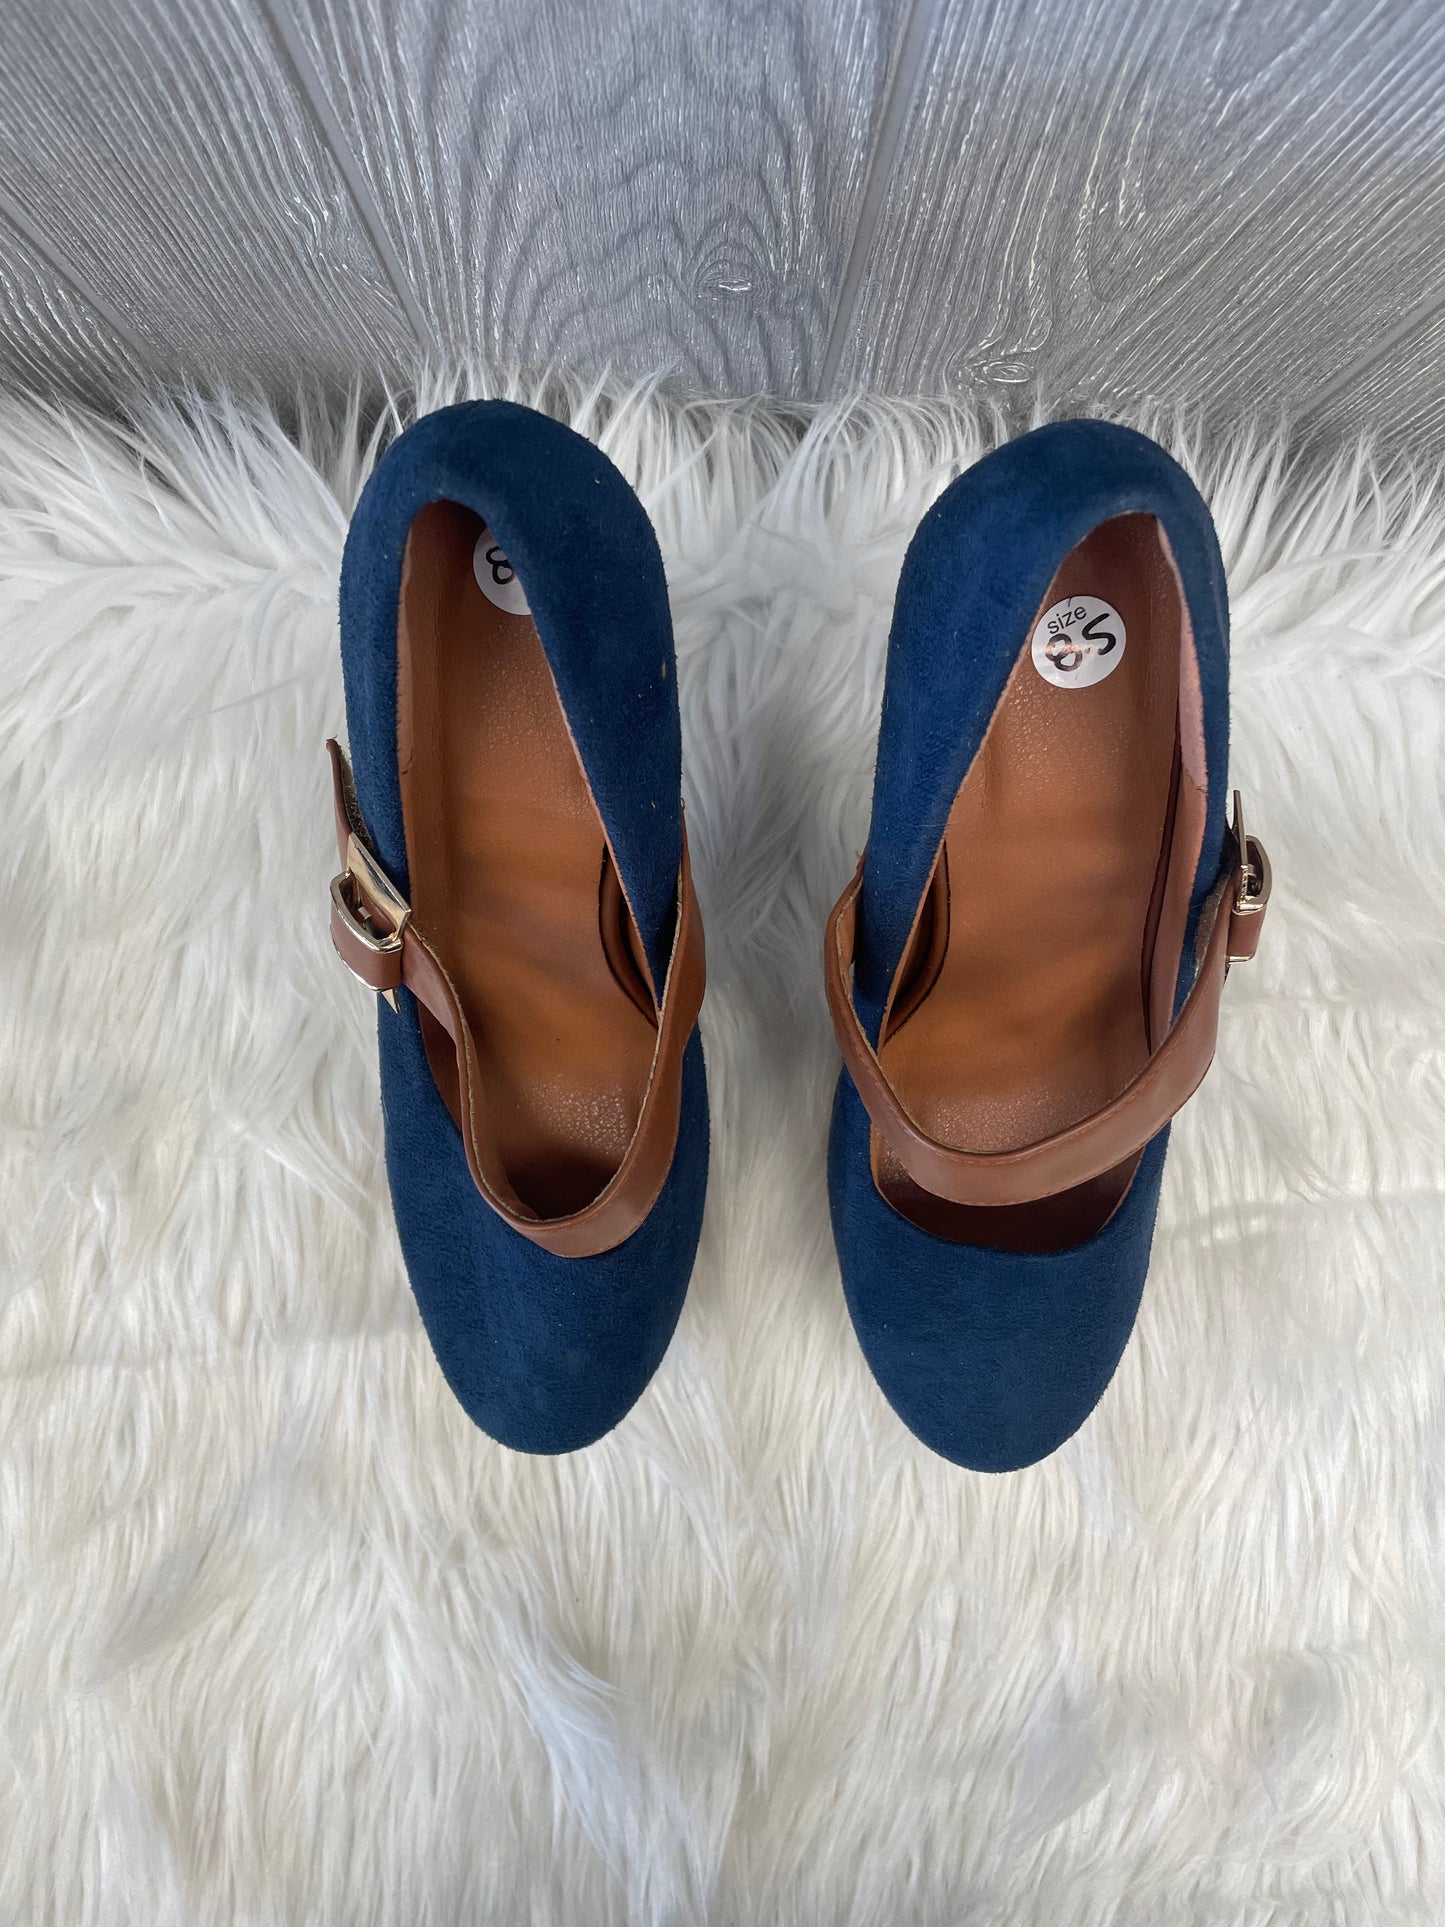 Blue Shoes Heels Stiletto Clothes Mentor, Size 8.5